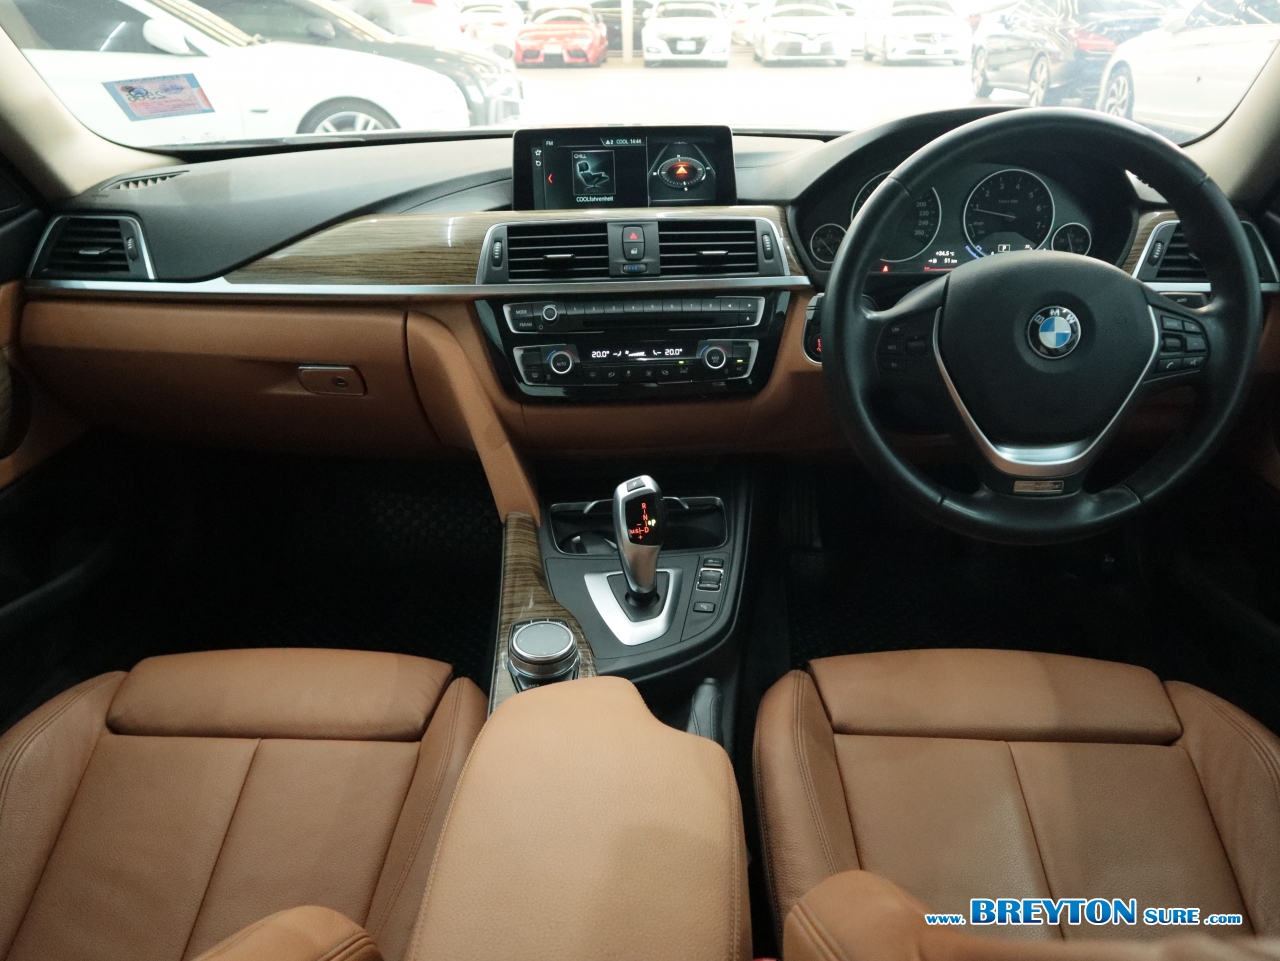 BMW SERIES 4 F 32  430i AT ปี 2018 ราคา 1,599,000 บาท #BT2022101712 #8